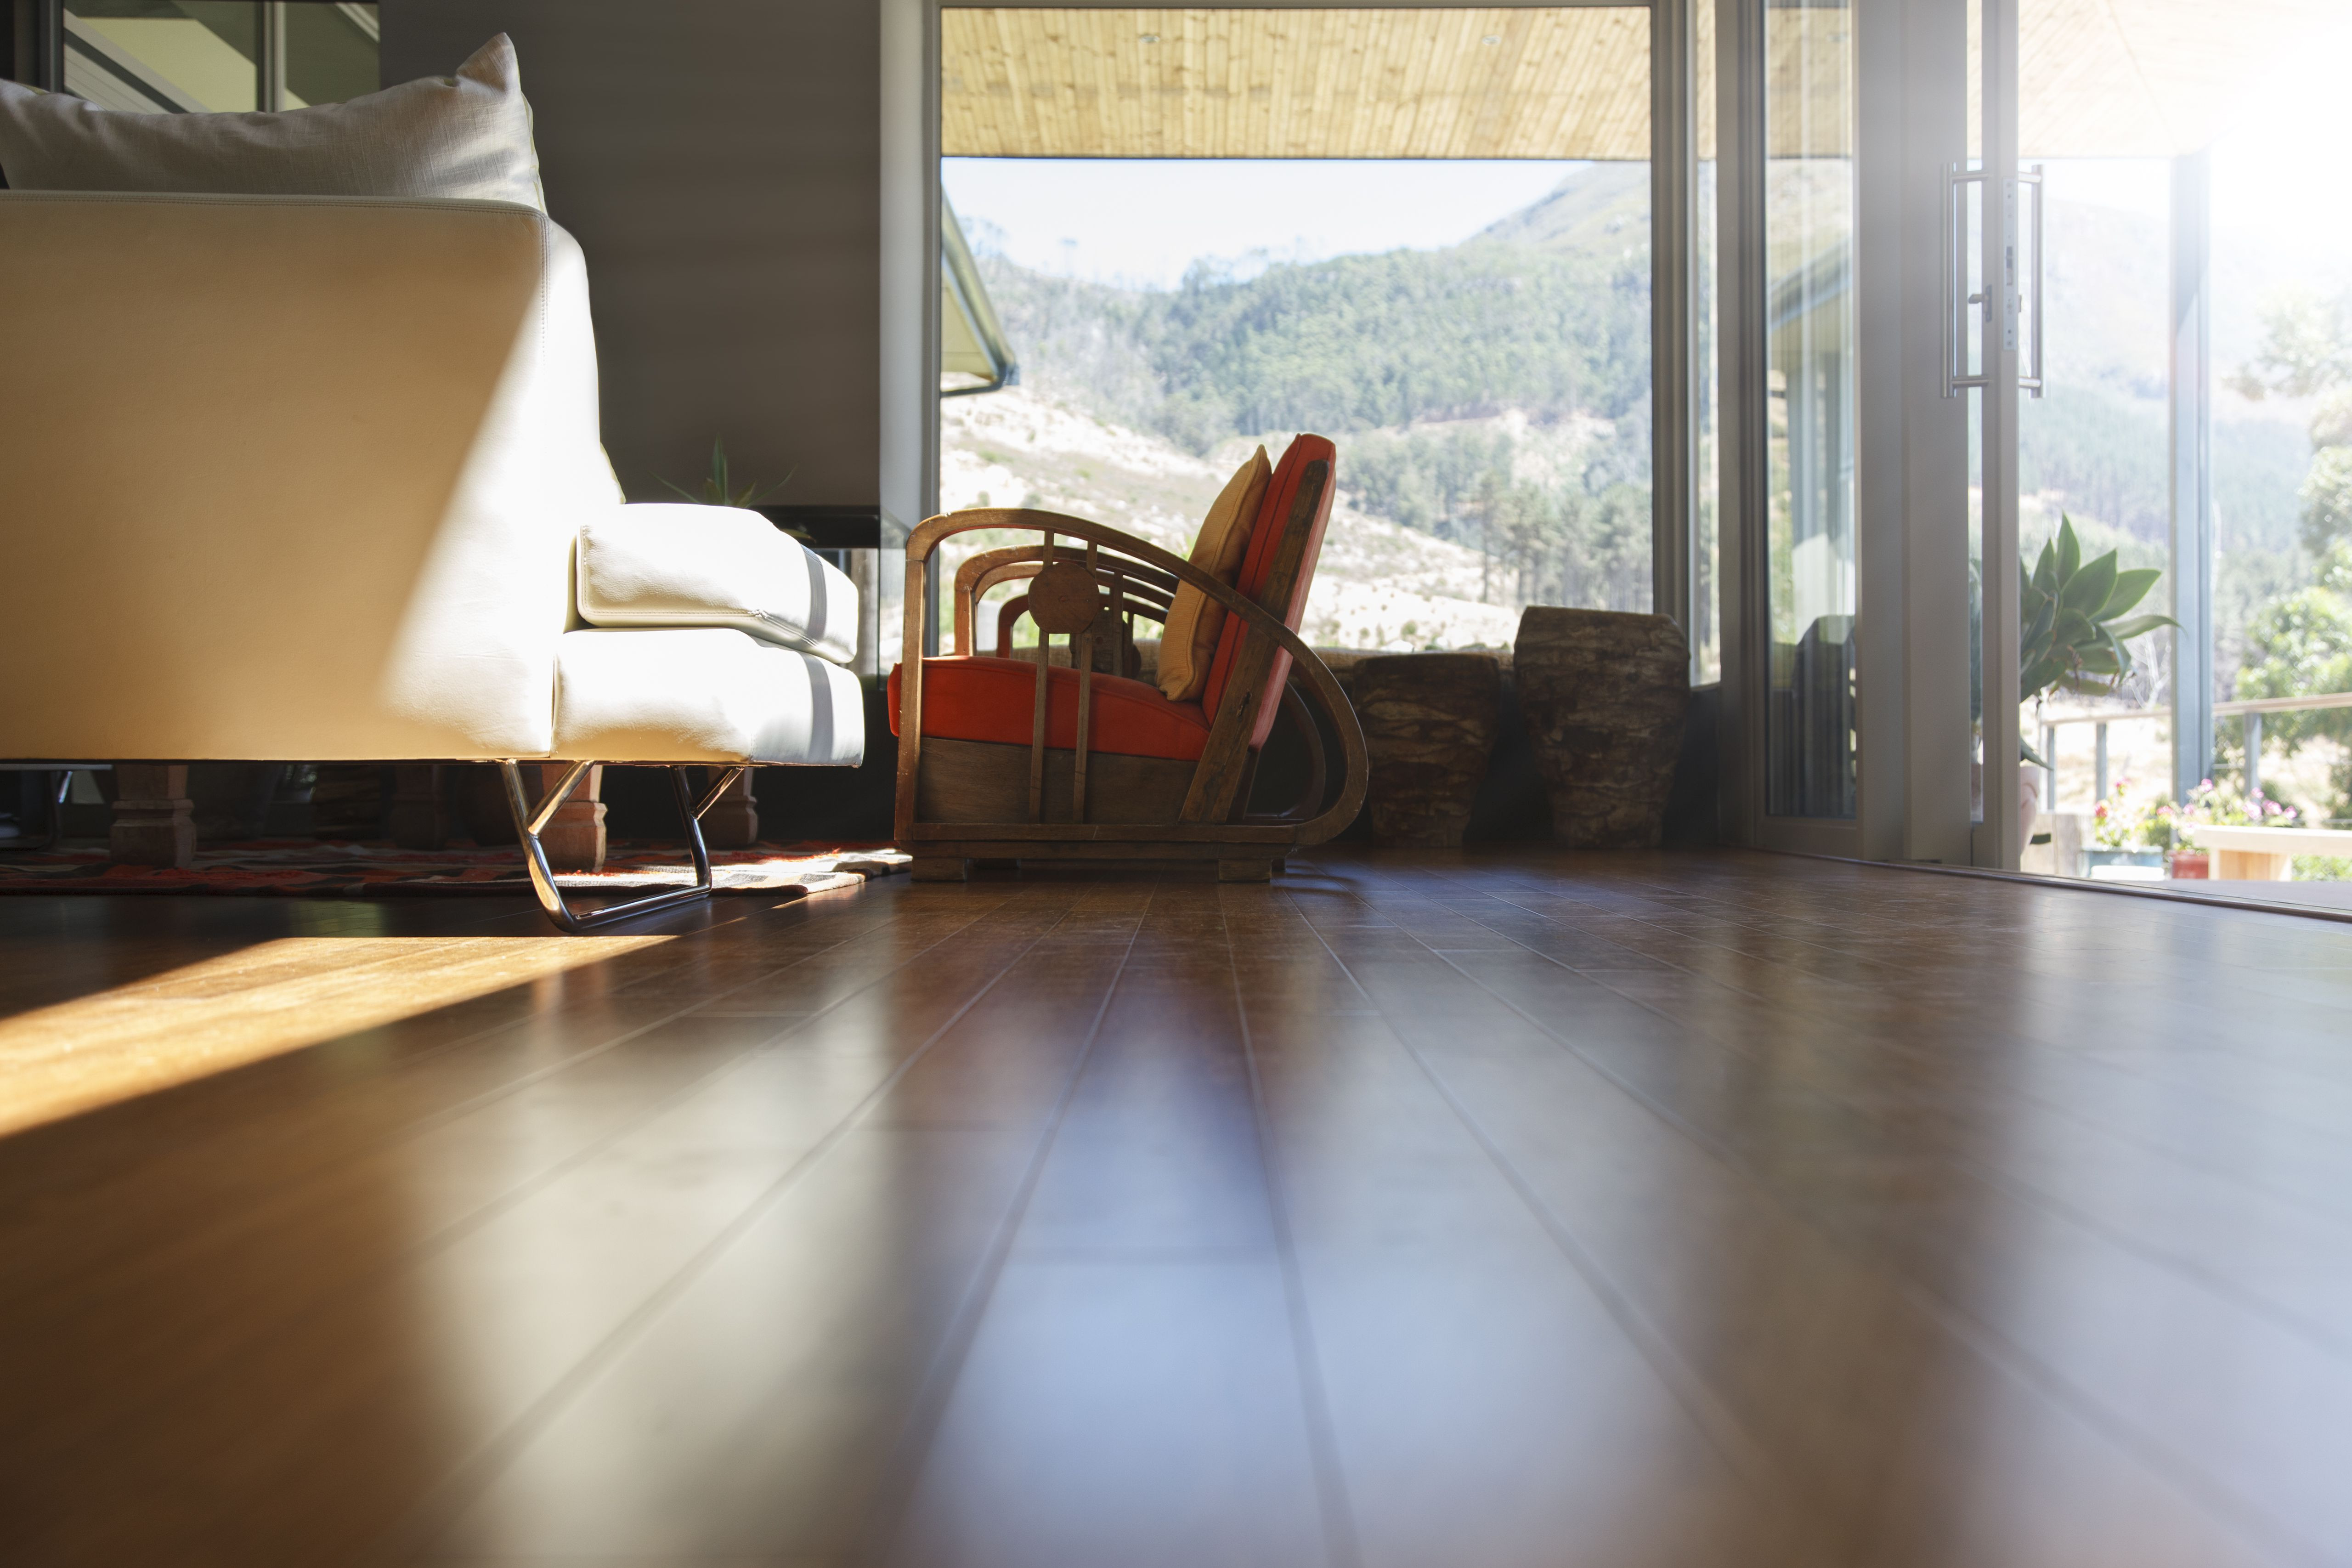 maple hardwood flooring vs oak of types of engineered flooring from premium hardwoods within living room interior hard wood floor and sofa 525439899 5a764f241d64040037603c15